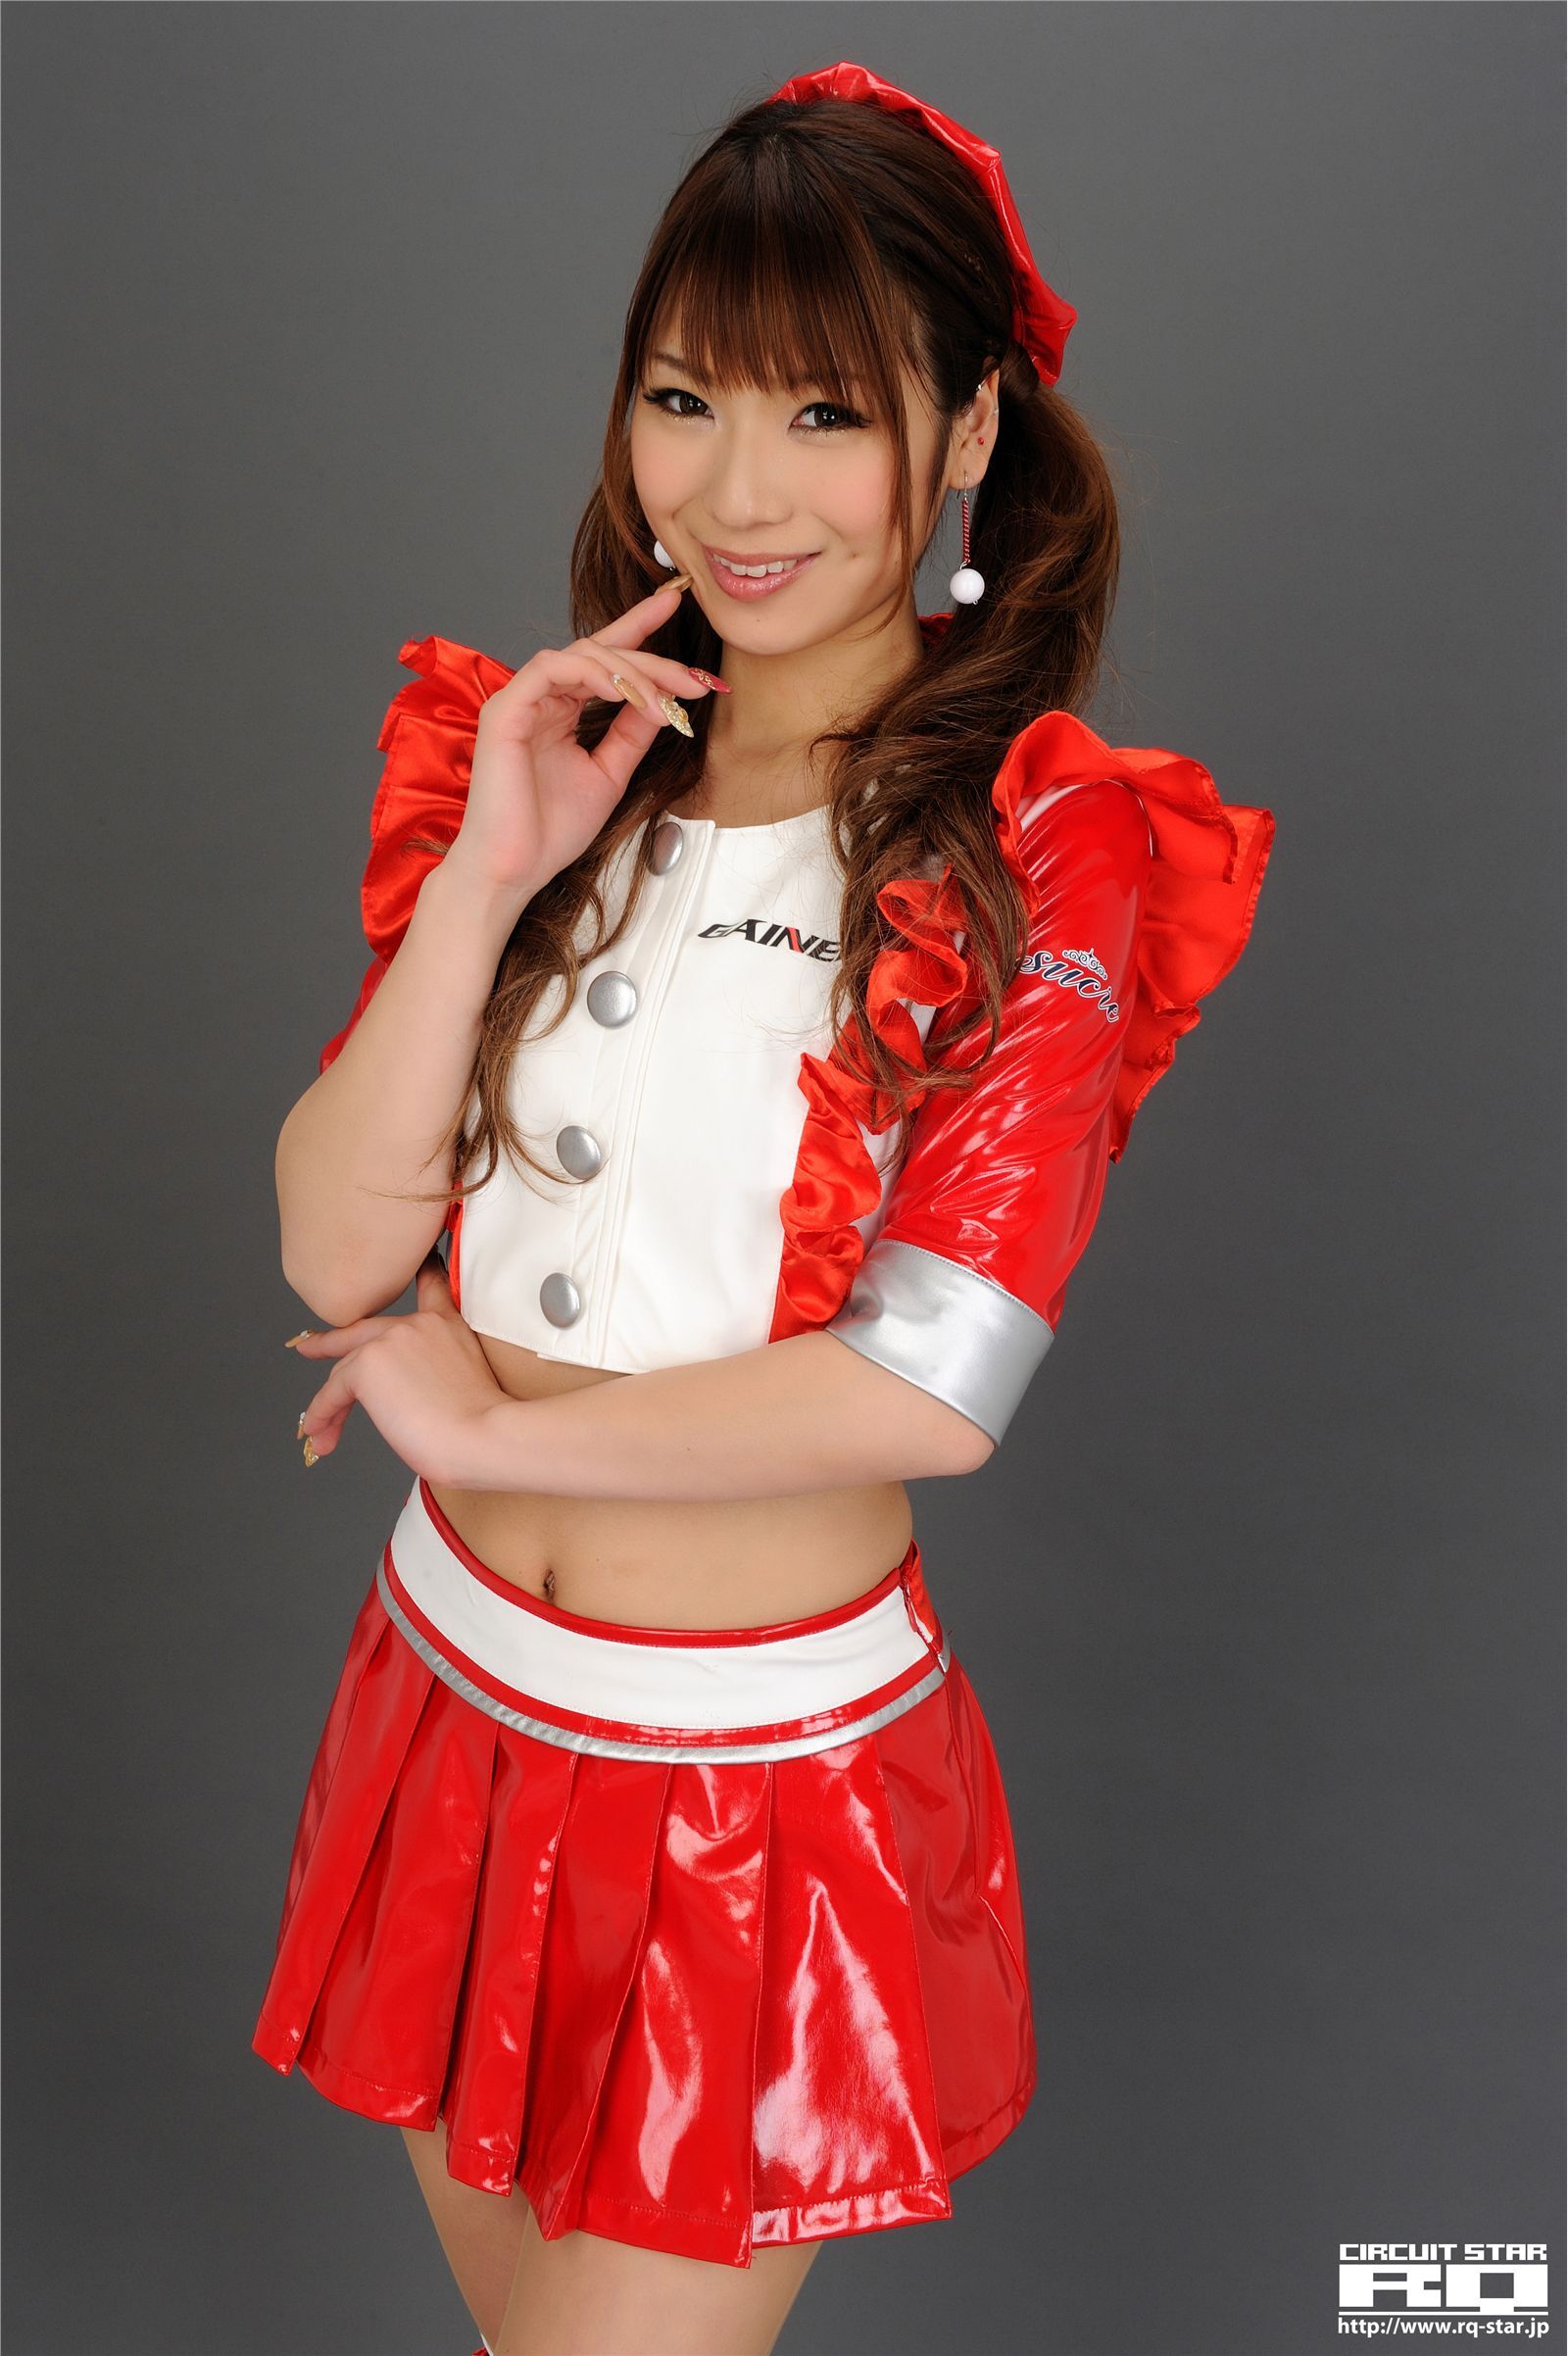 Color world [RQ star] [04-16] no.00624 Japanese beauty uniform photo